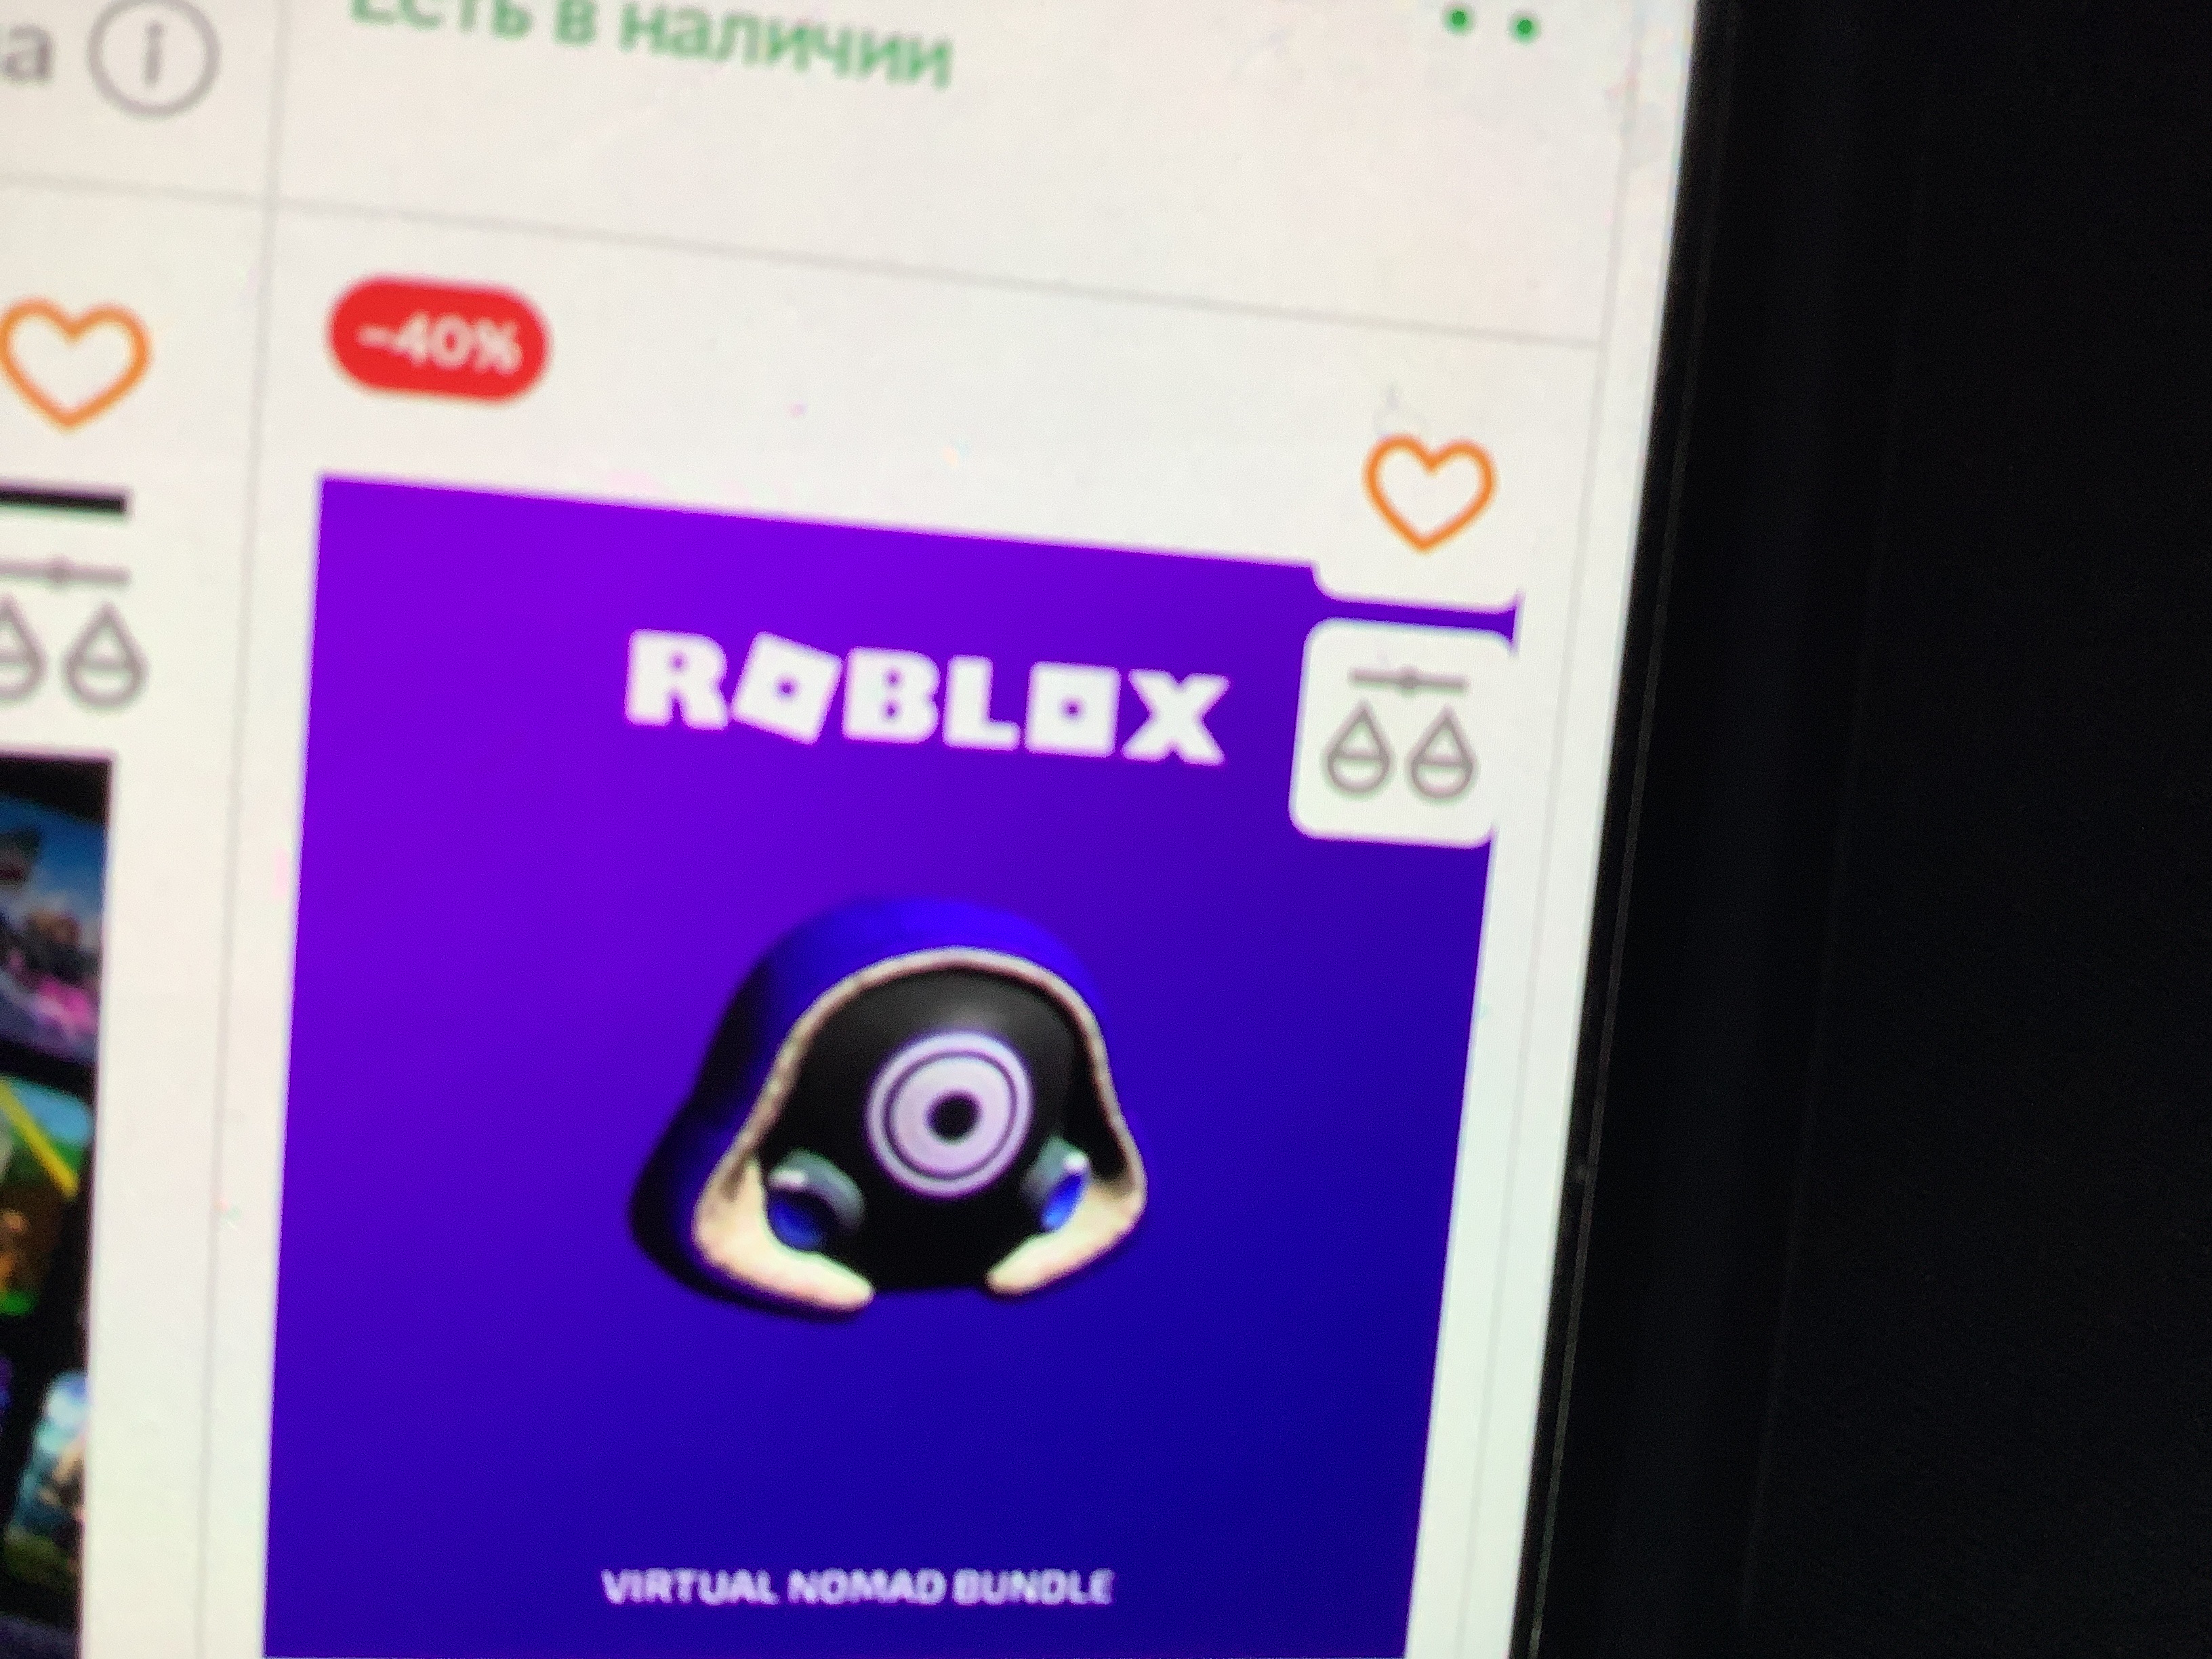 ROBLOX MARDI GRAS Steampunk Mask Code - All Platforms - Global $2.95 -  PicClick